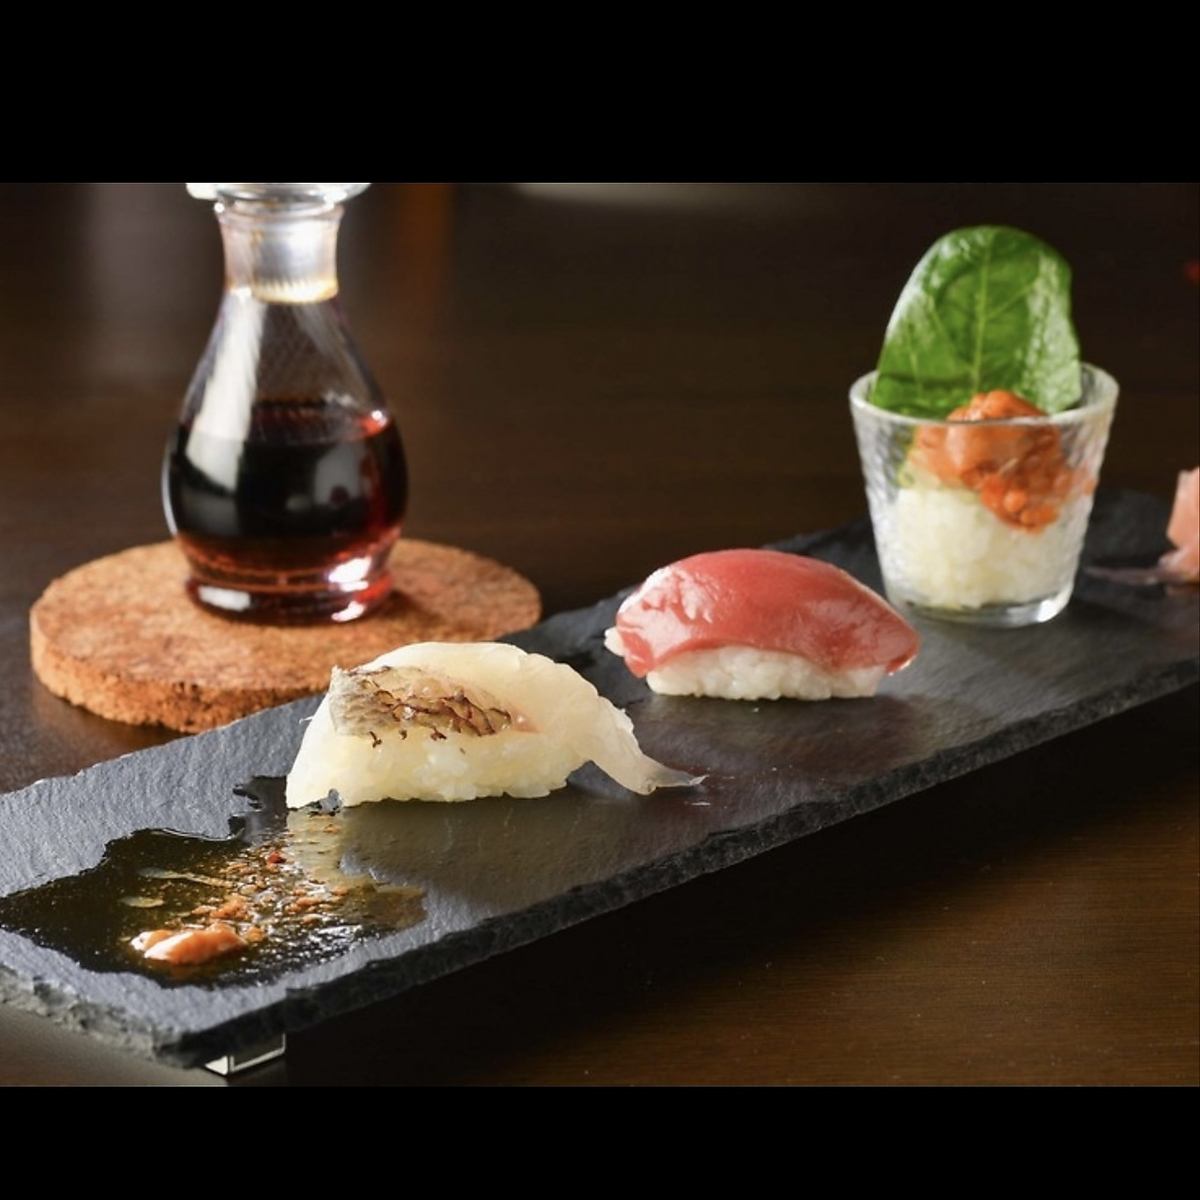 Original Japanese cuisine made with original taste dishes, sake, and live ingredients